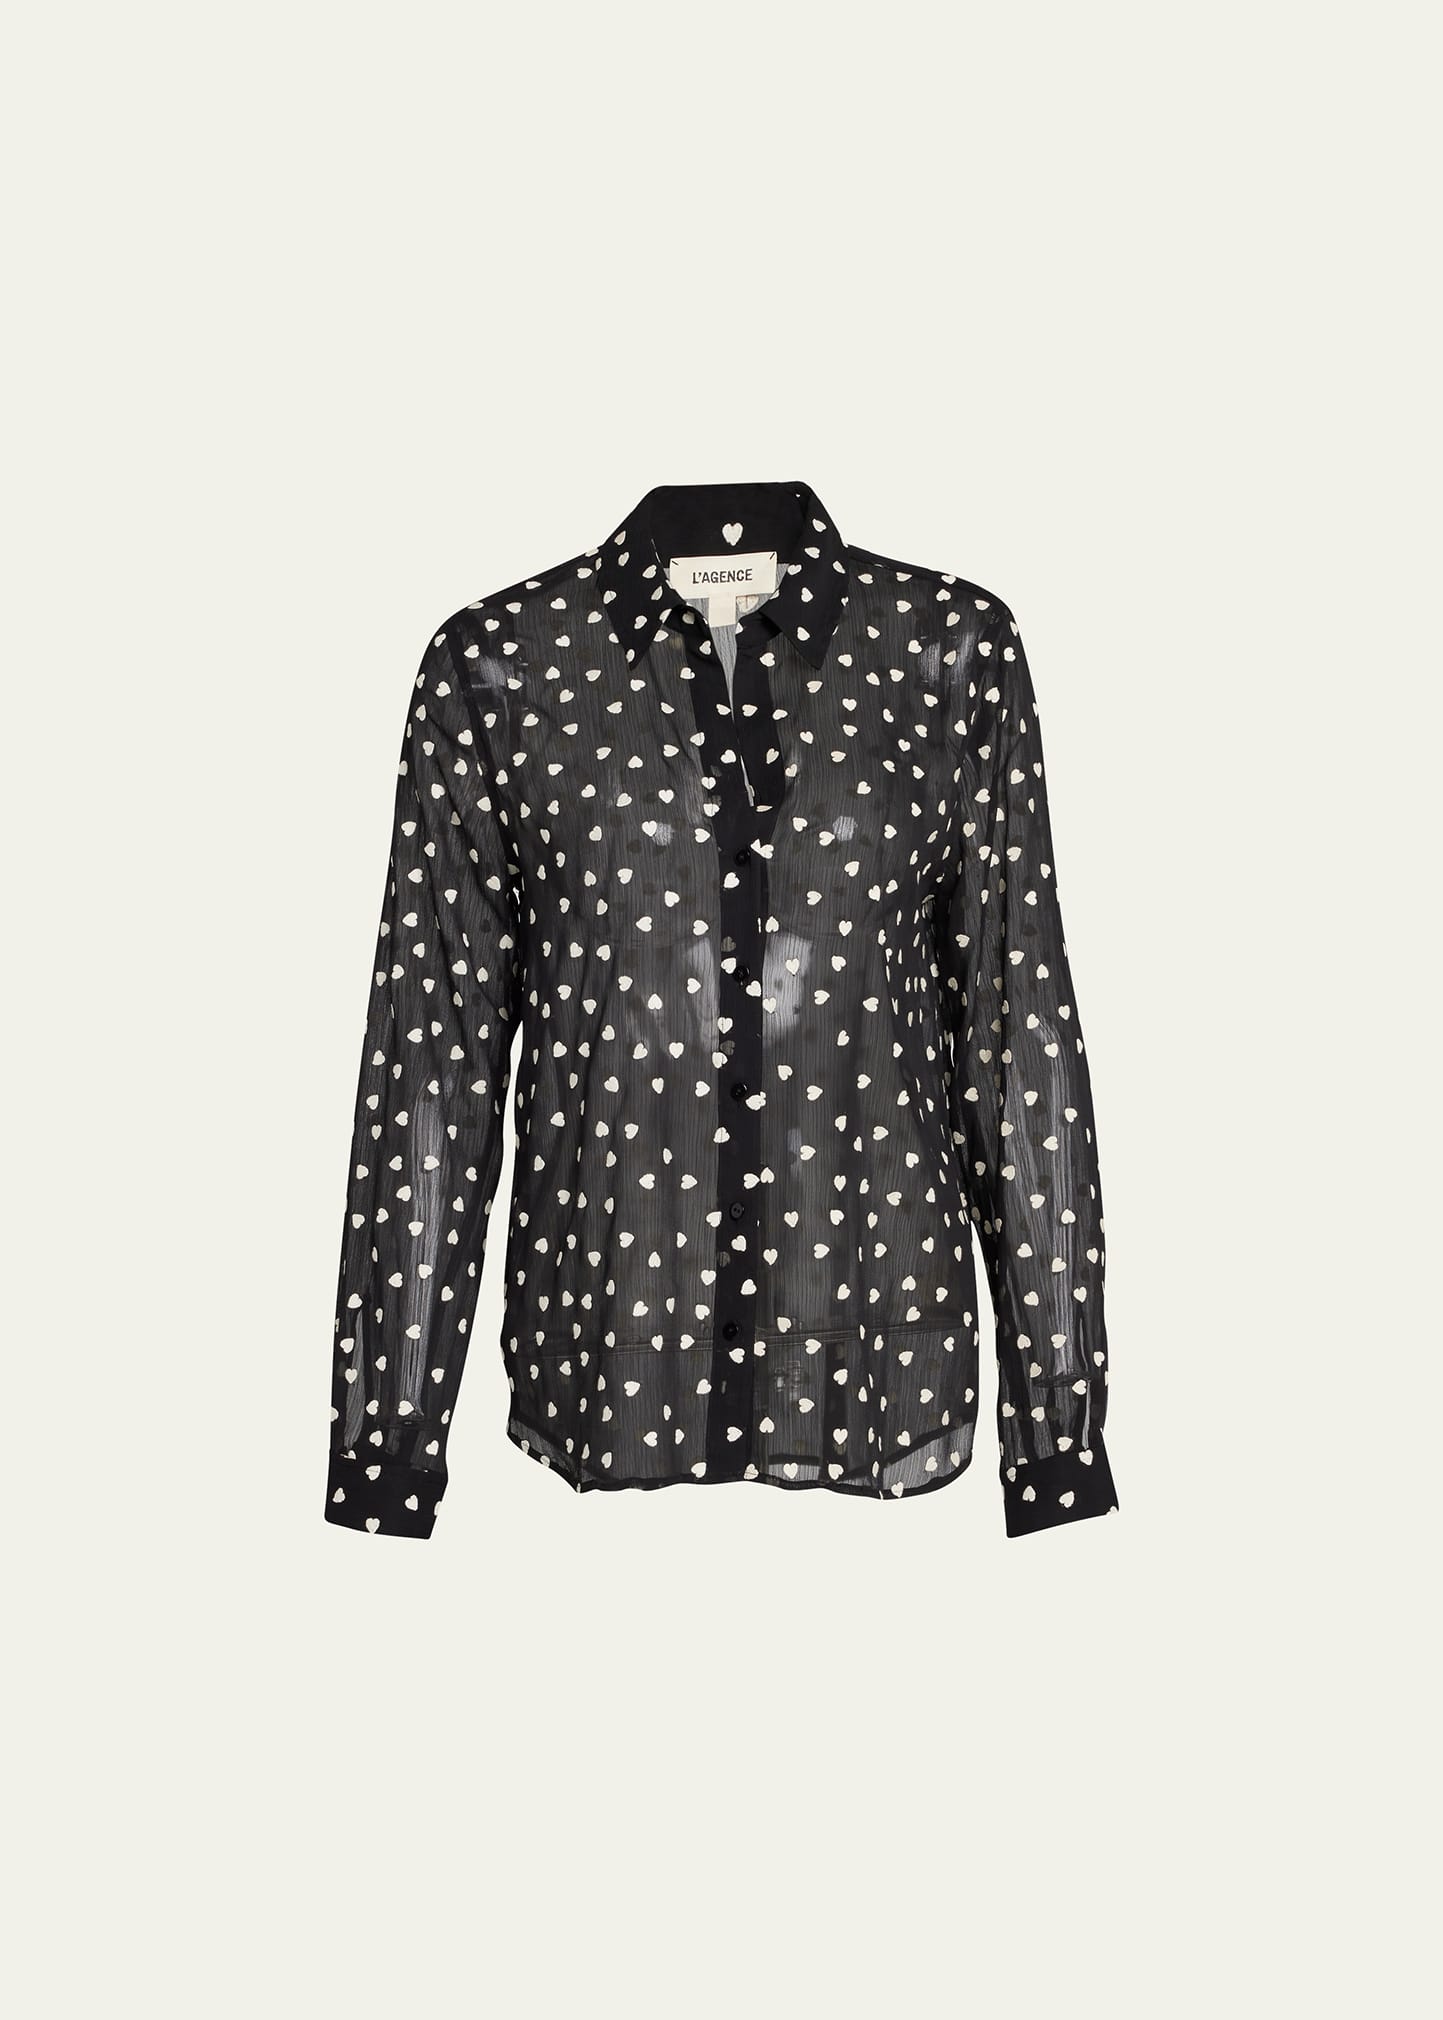 L'Agence Sheer Polka-dot Shirt in Black